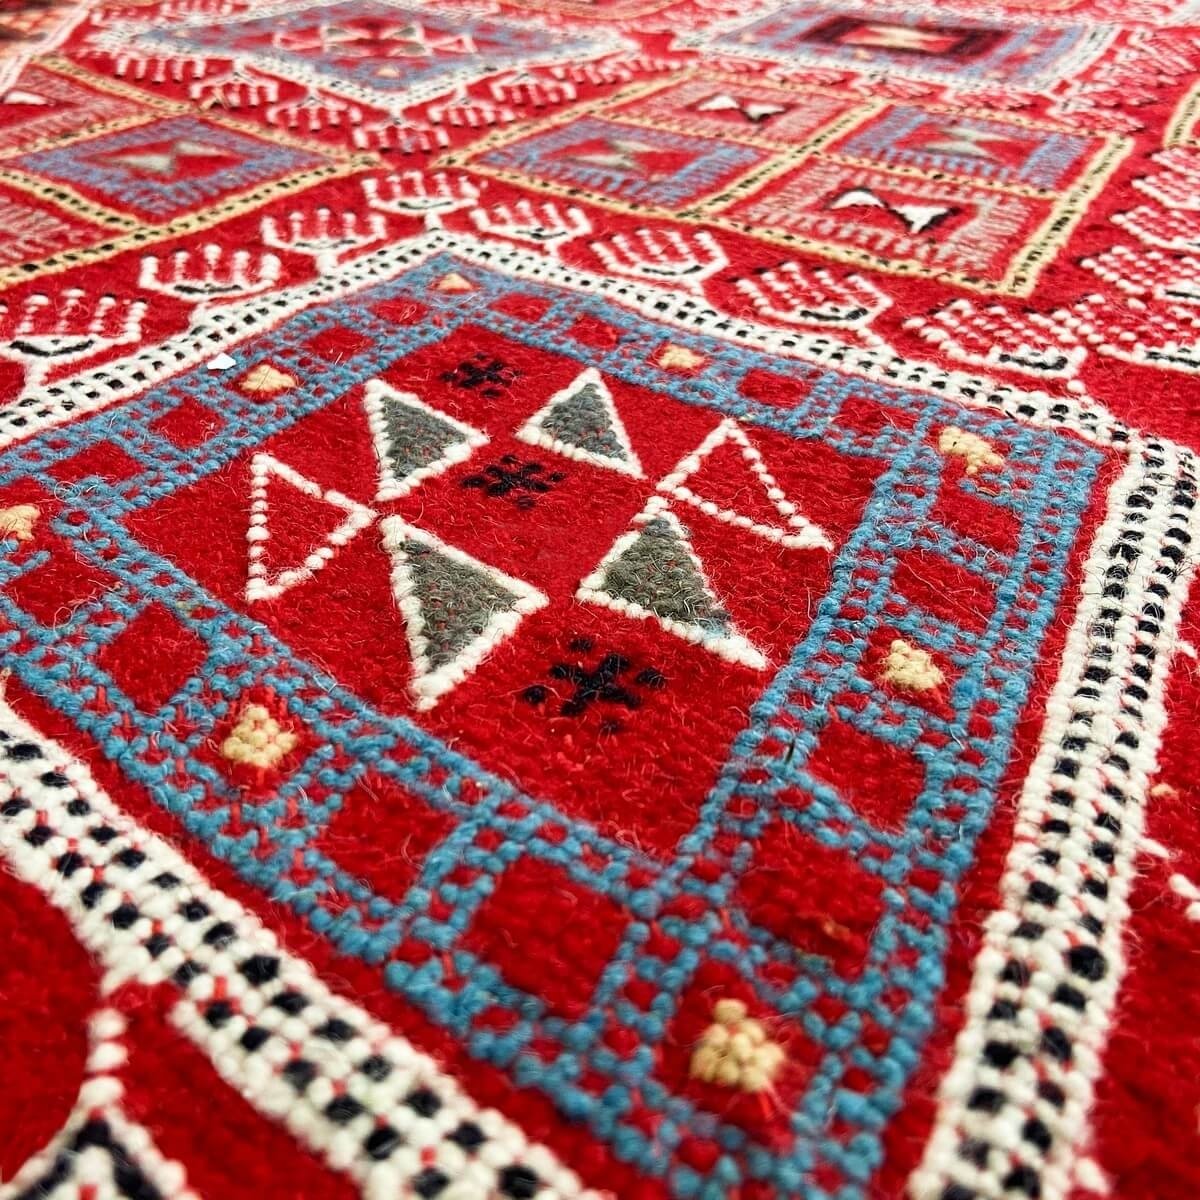 Berber carpet Rug Margoum Ayoun 126x208 Red (Handmade, Wool) Tunisian margoum rug from the city of Kairouan. Rectangular living 